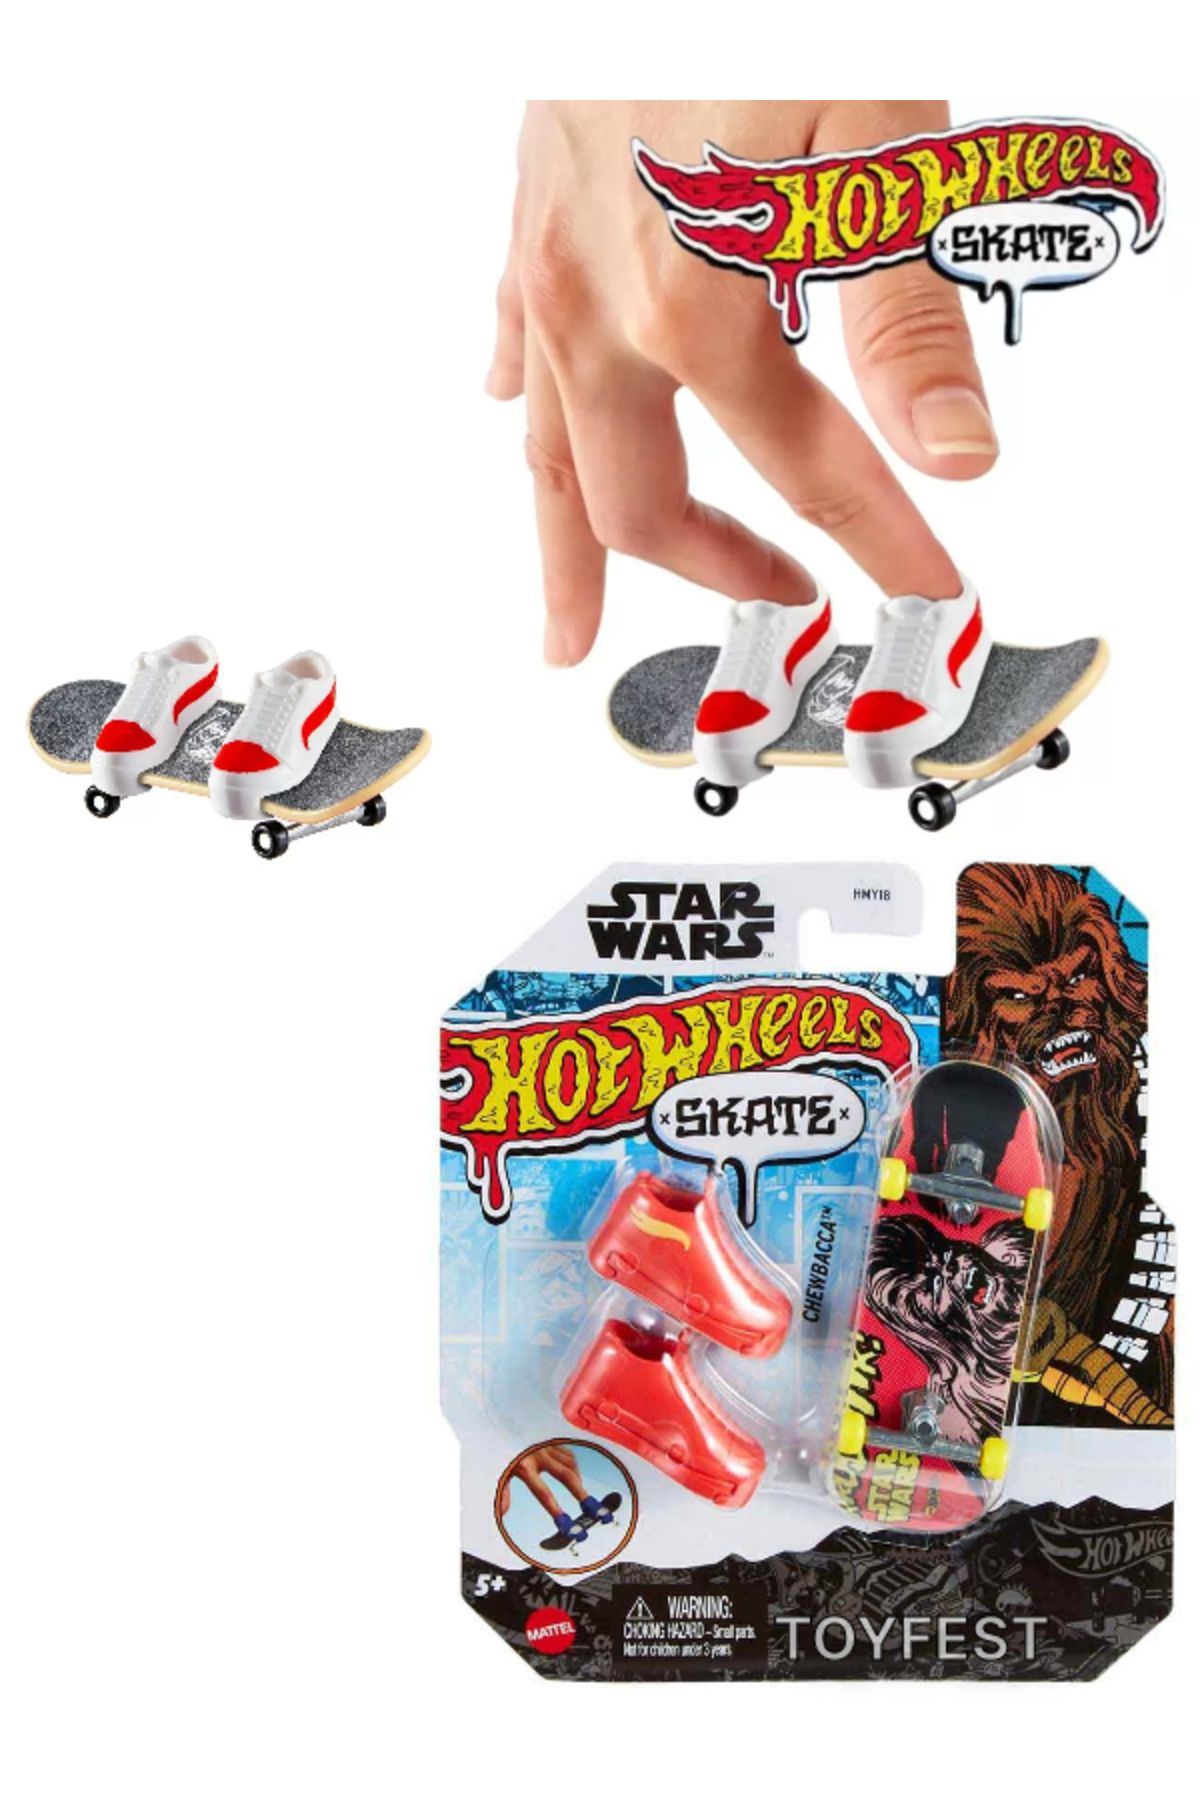 HOT WHEELS Skate Star Wars Temalı Parmak Kaykay ve Ayakkabı Paketleri - Chewbacca